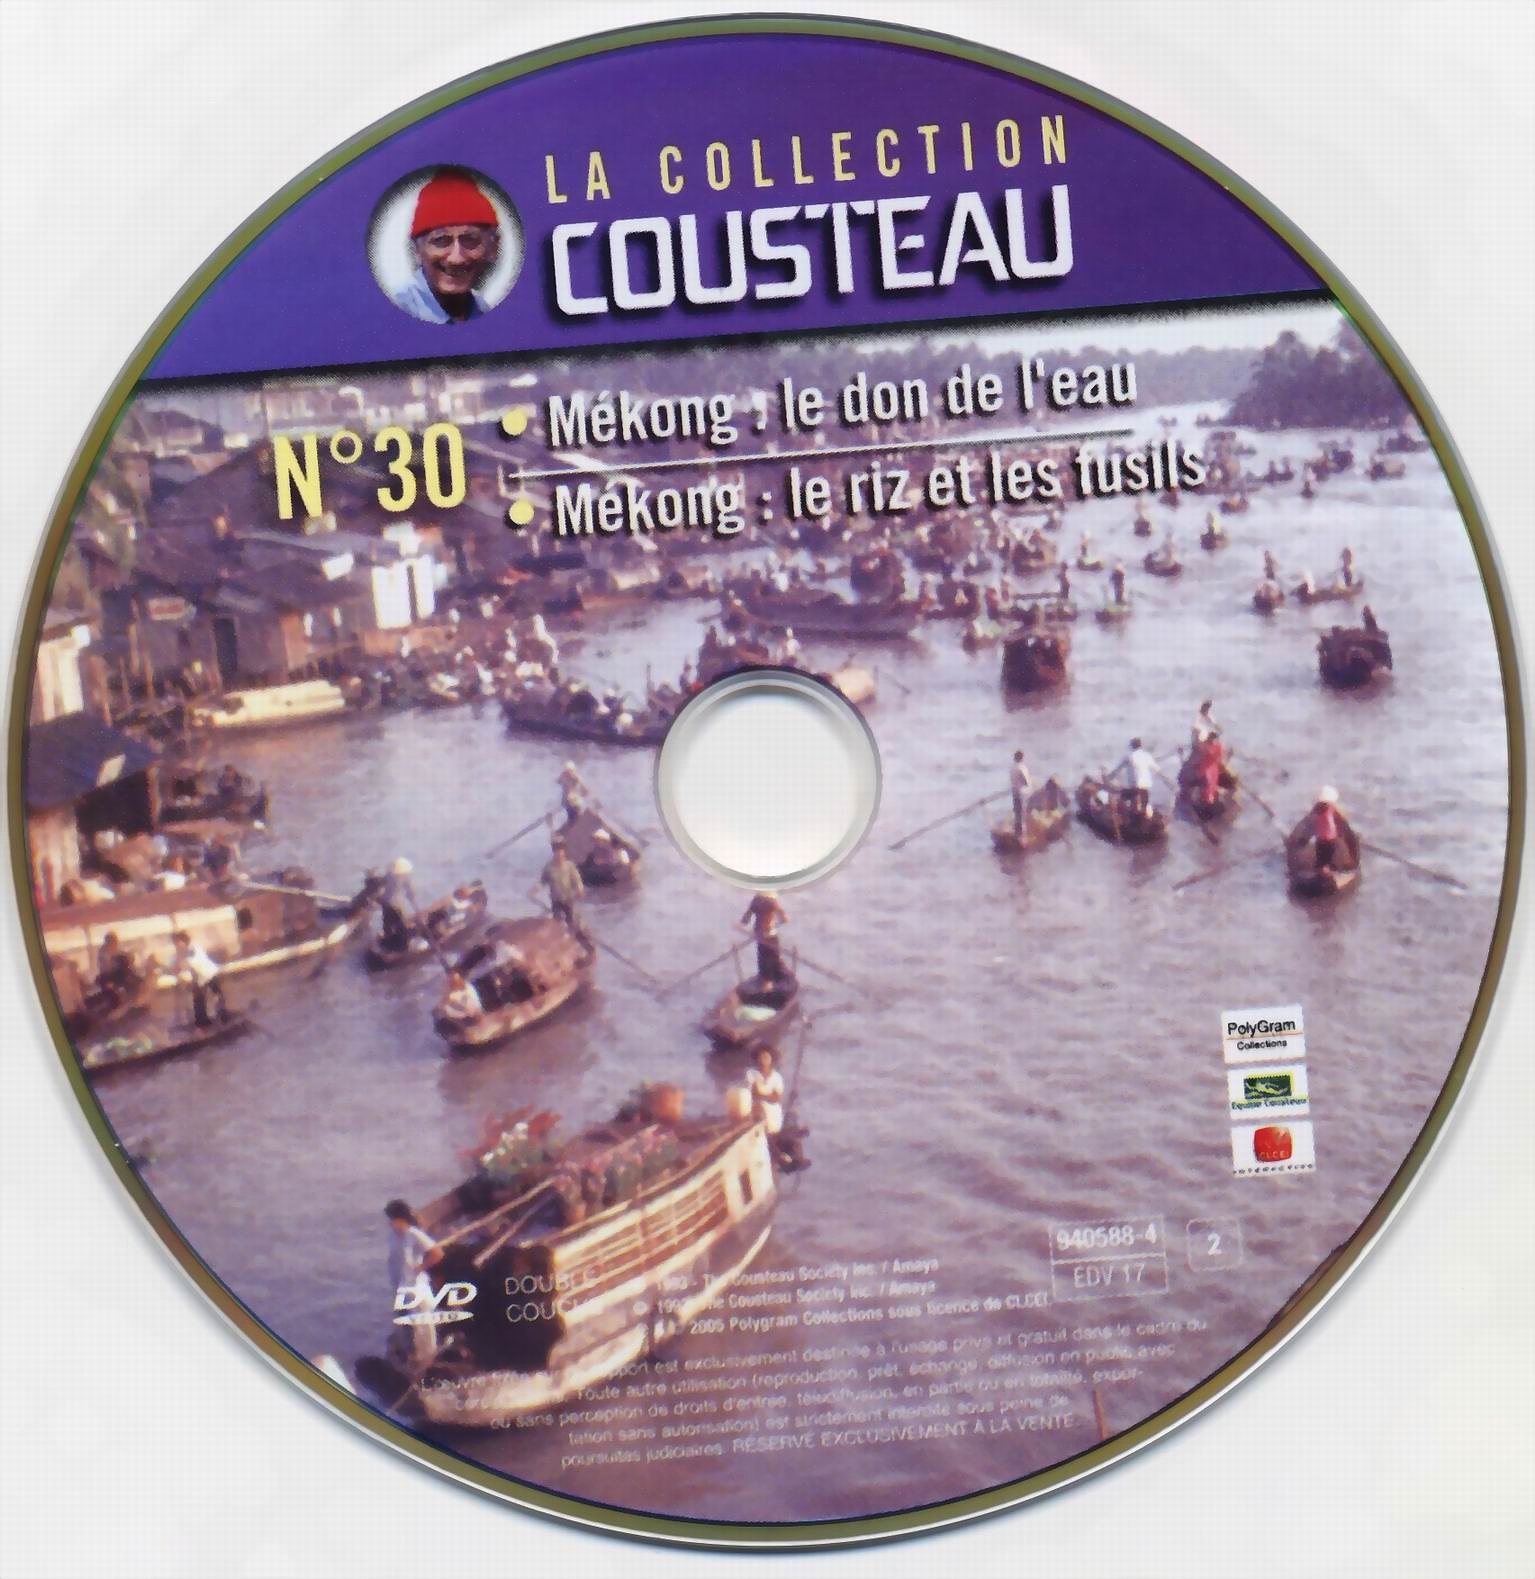 Cousteau Collection vol 30